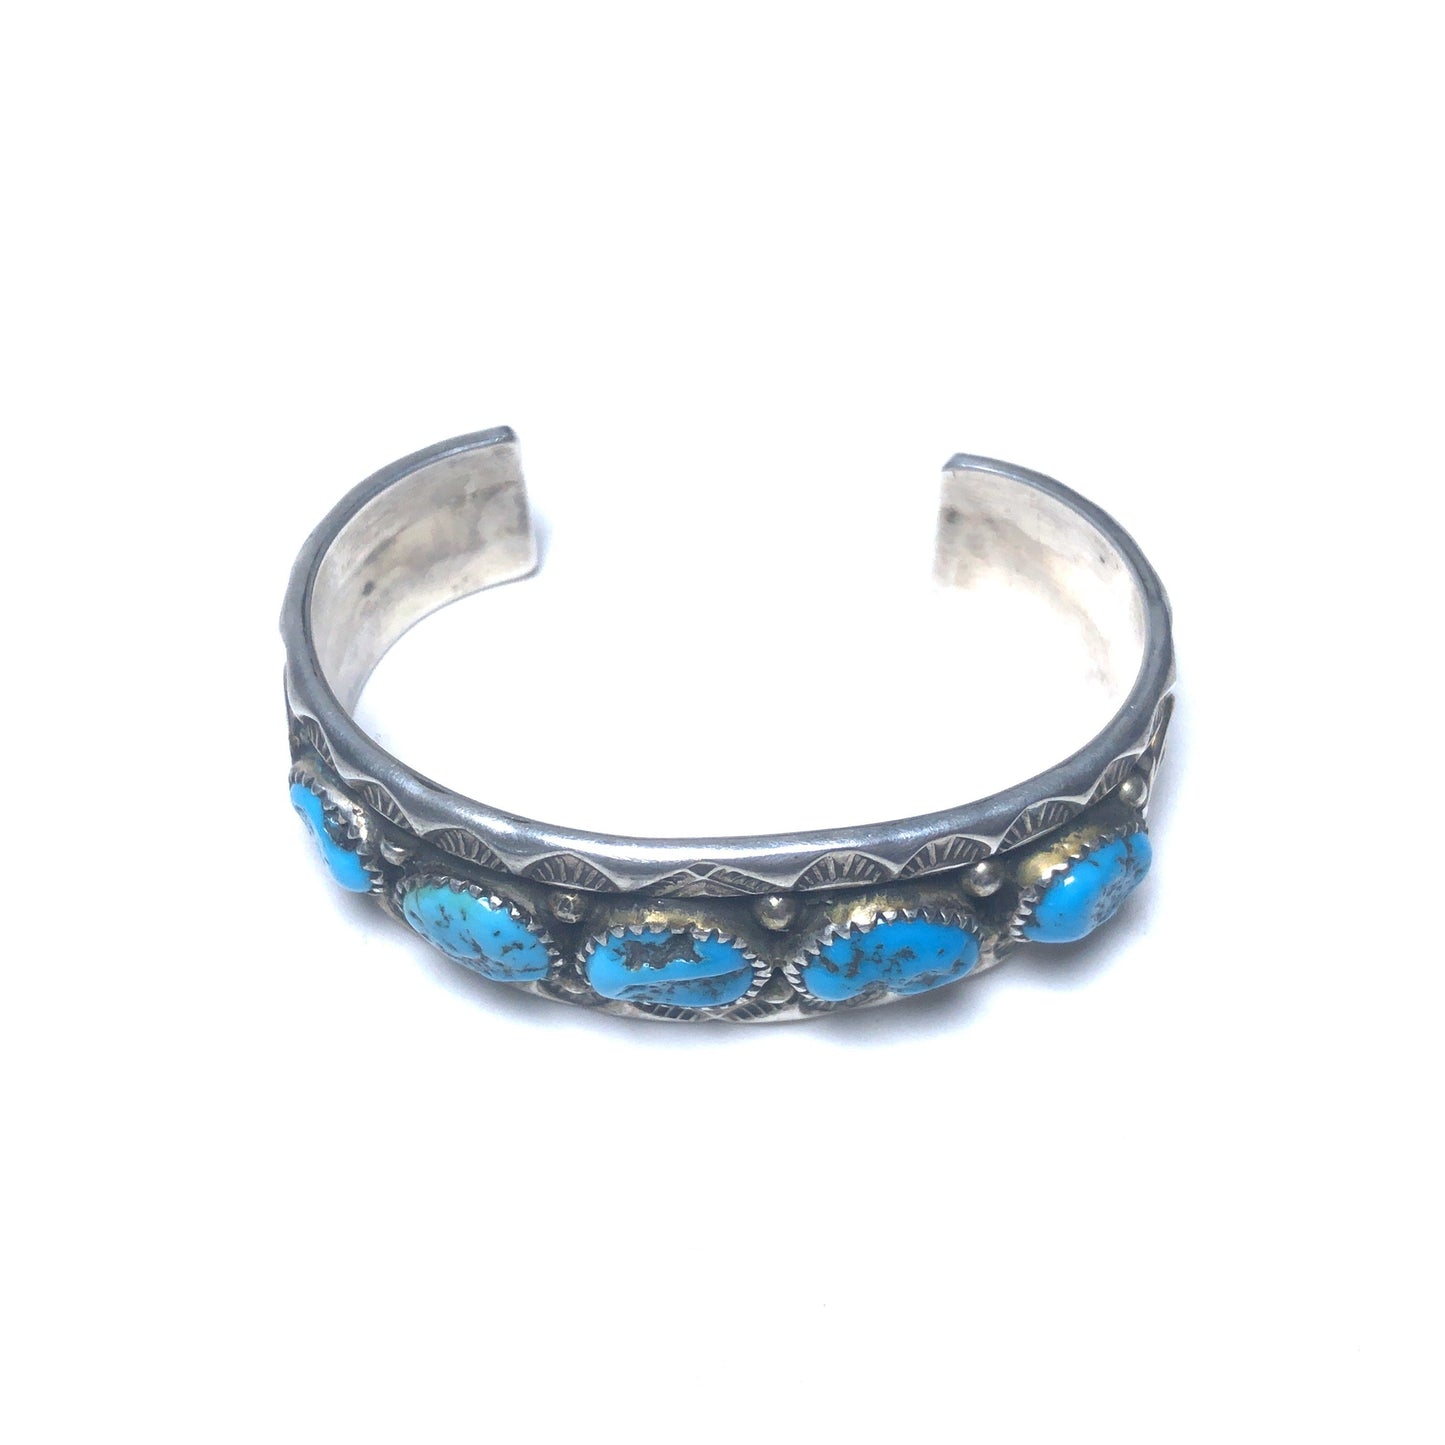 Sleeping Beauty Turquoise Sterling Silver Bracelet 5.5" wrist or smaller